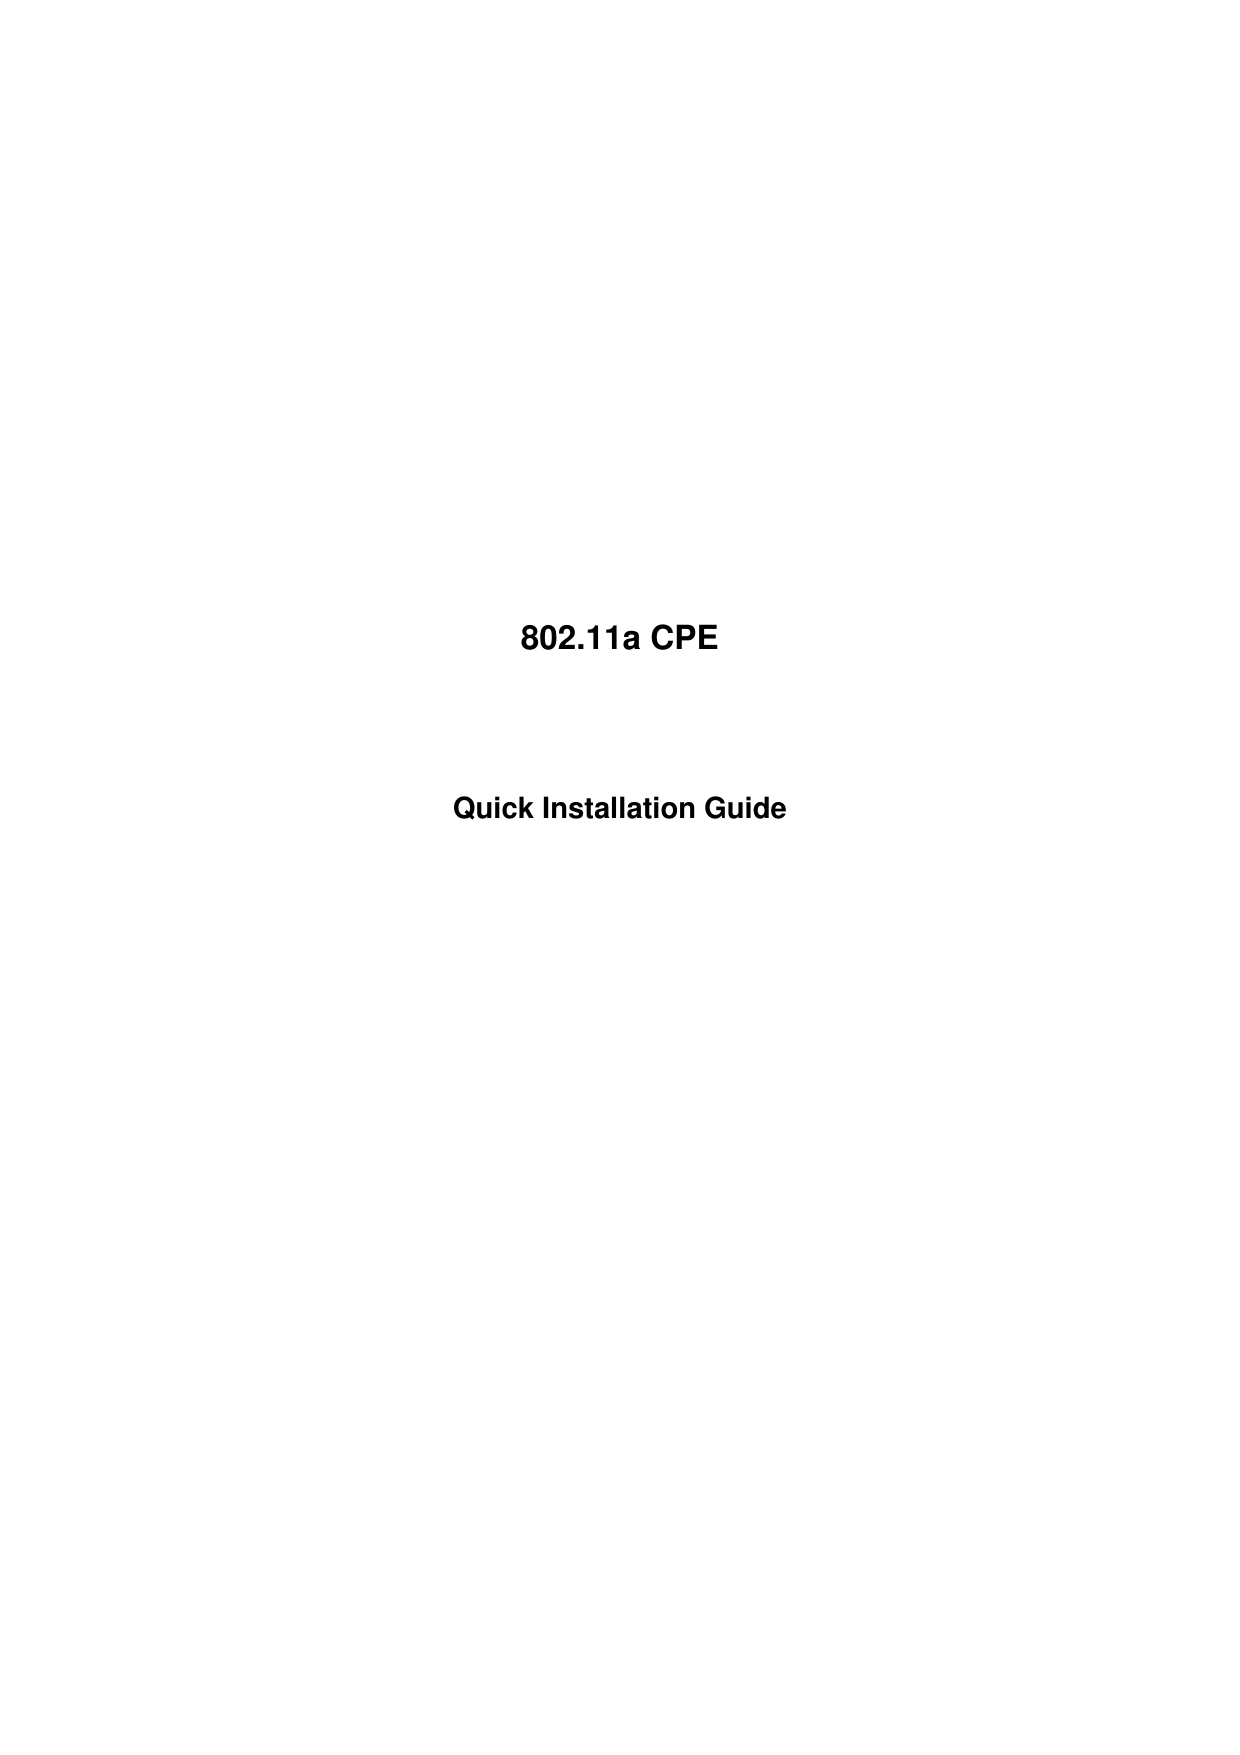            802.11a CPE    Quick Installation Guide                     